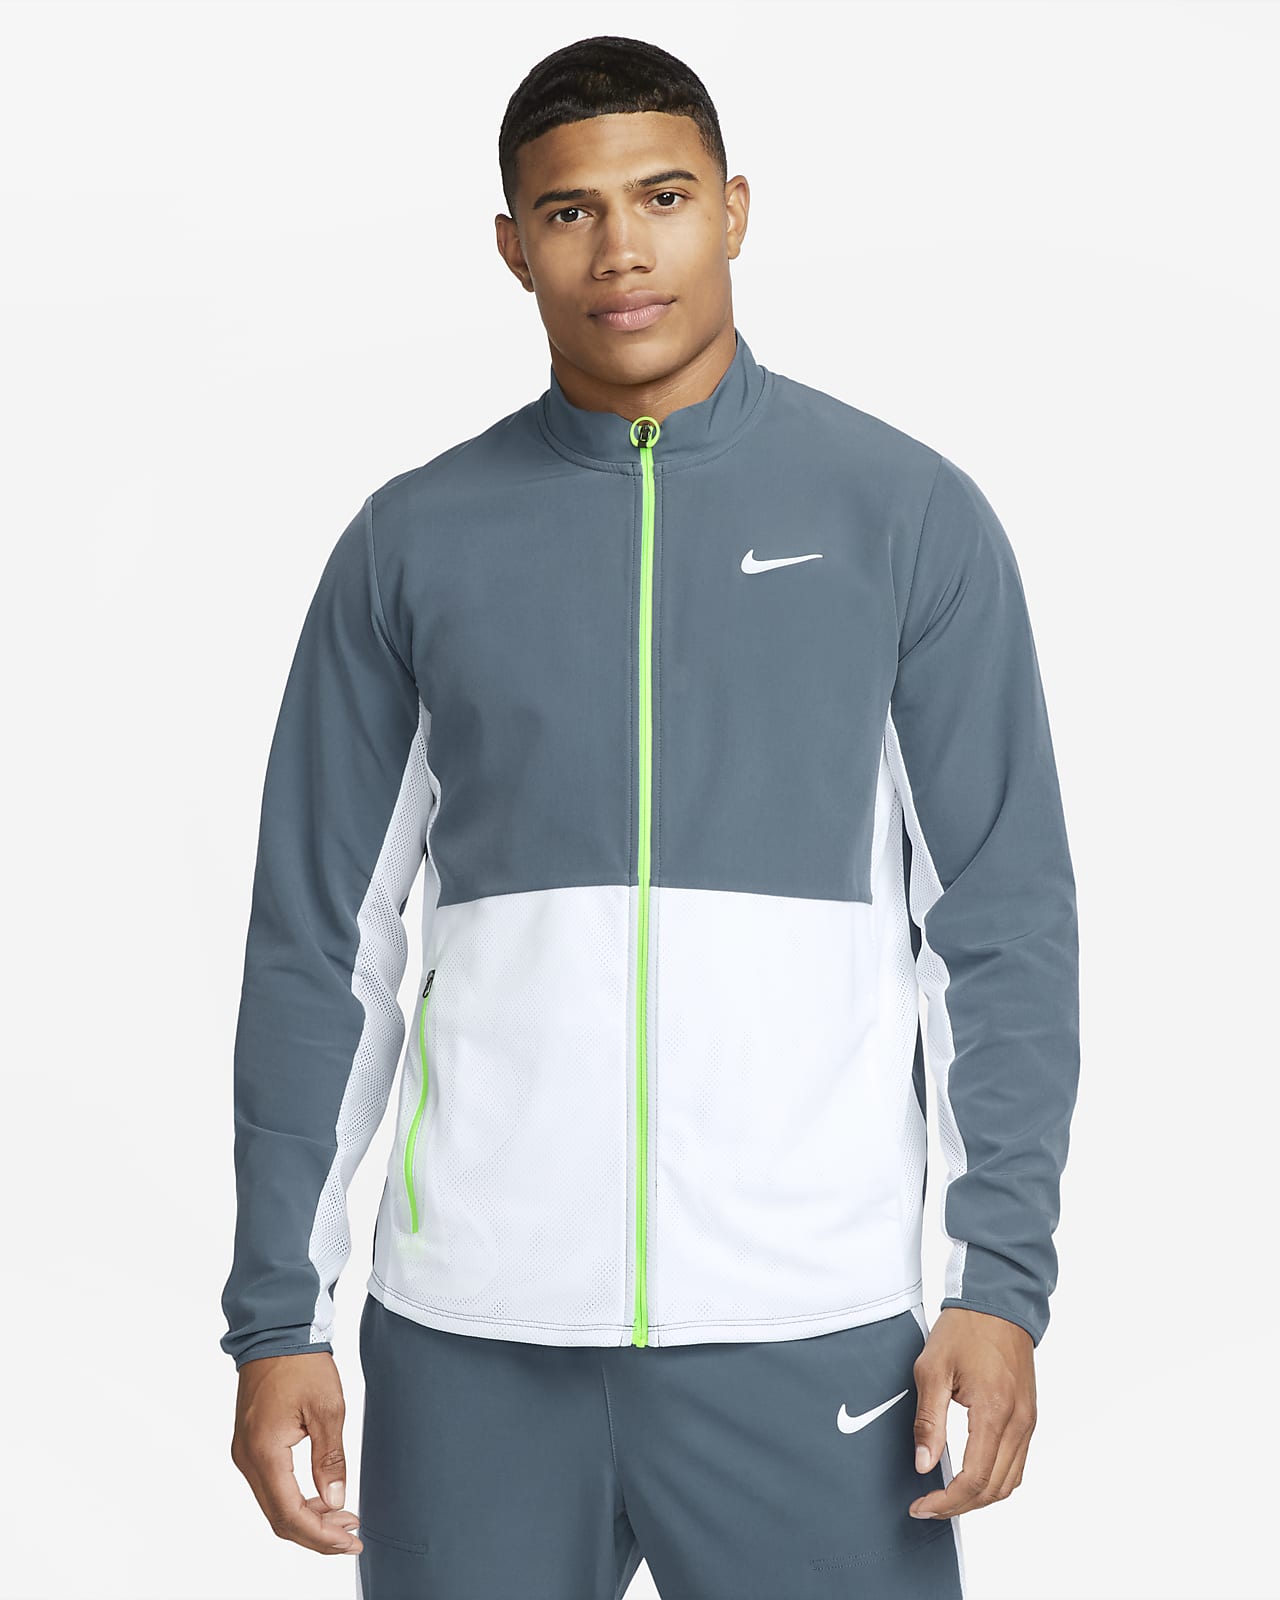 NikeCourt Advantage Men's Tennis Jacket.